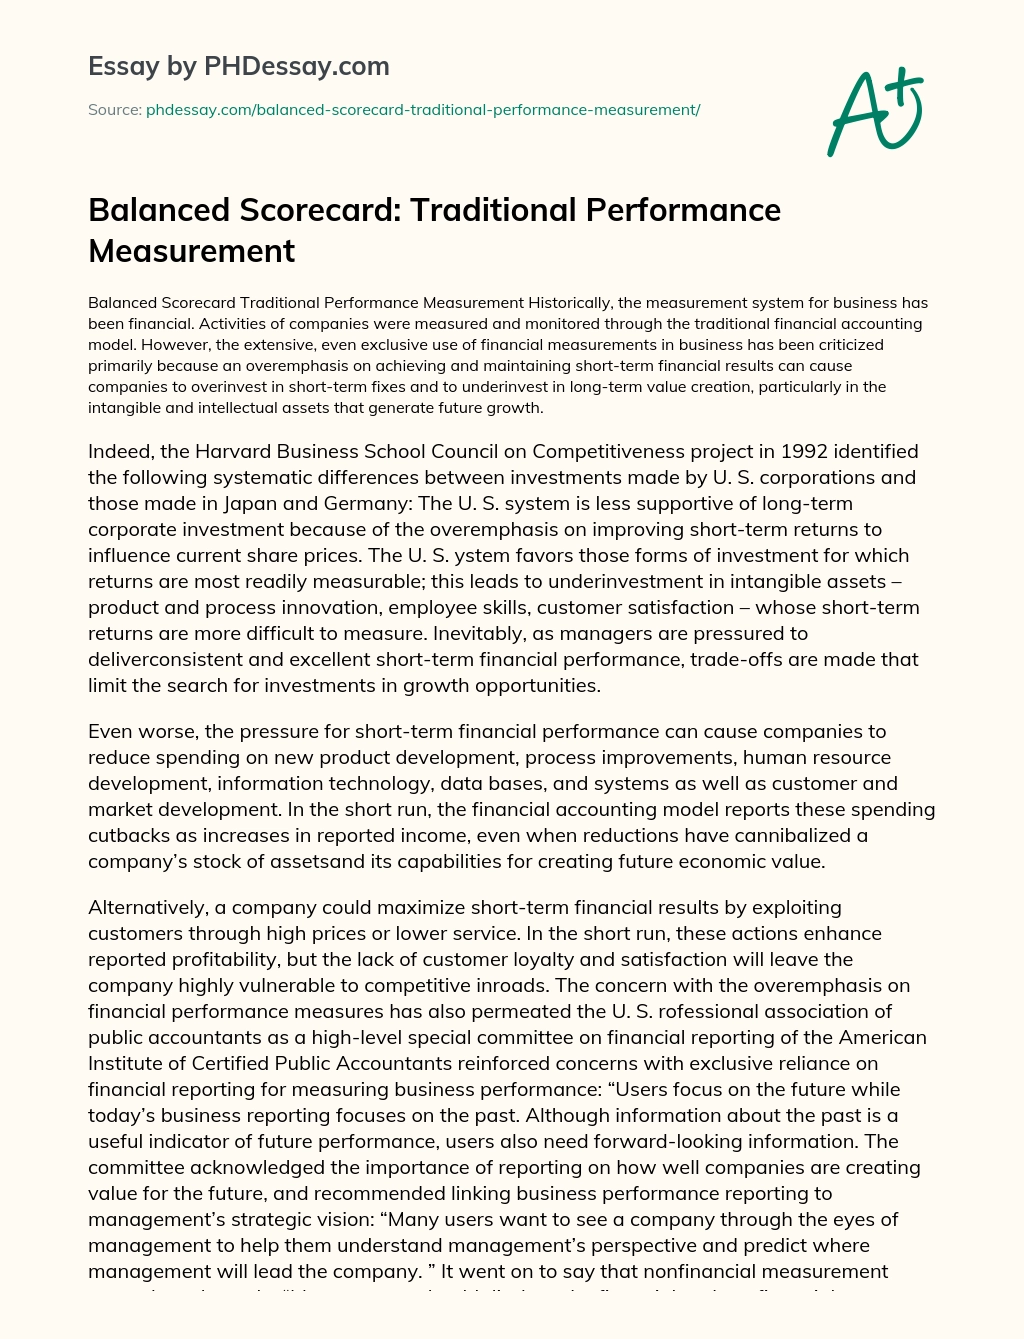 Balanced Scorecard:  Traditional Performance Measurement essay